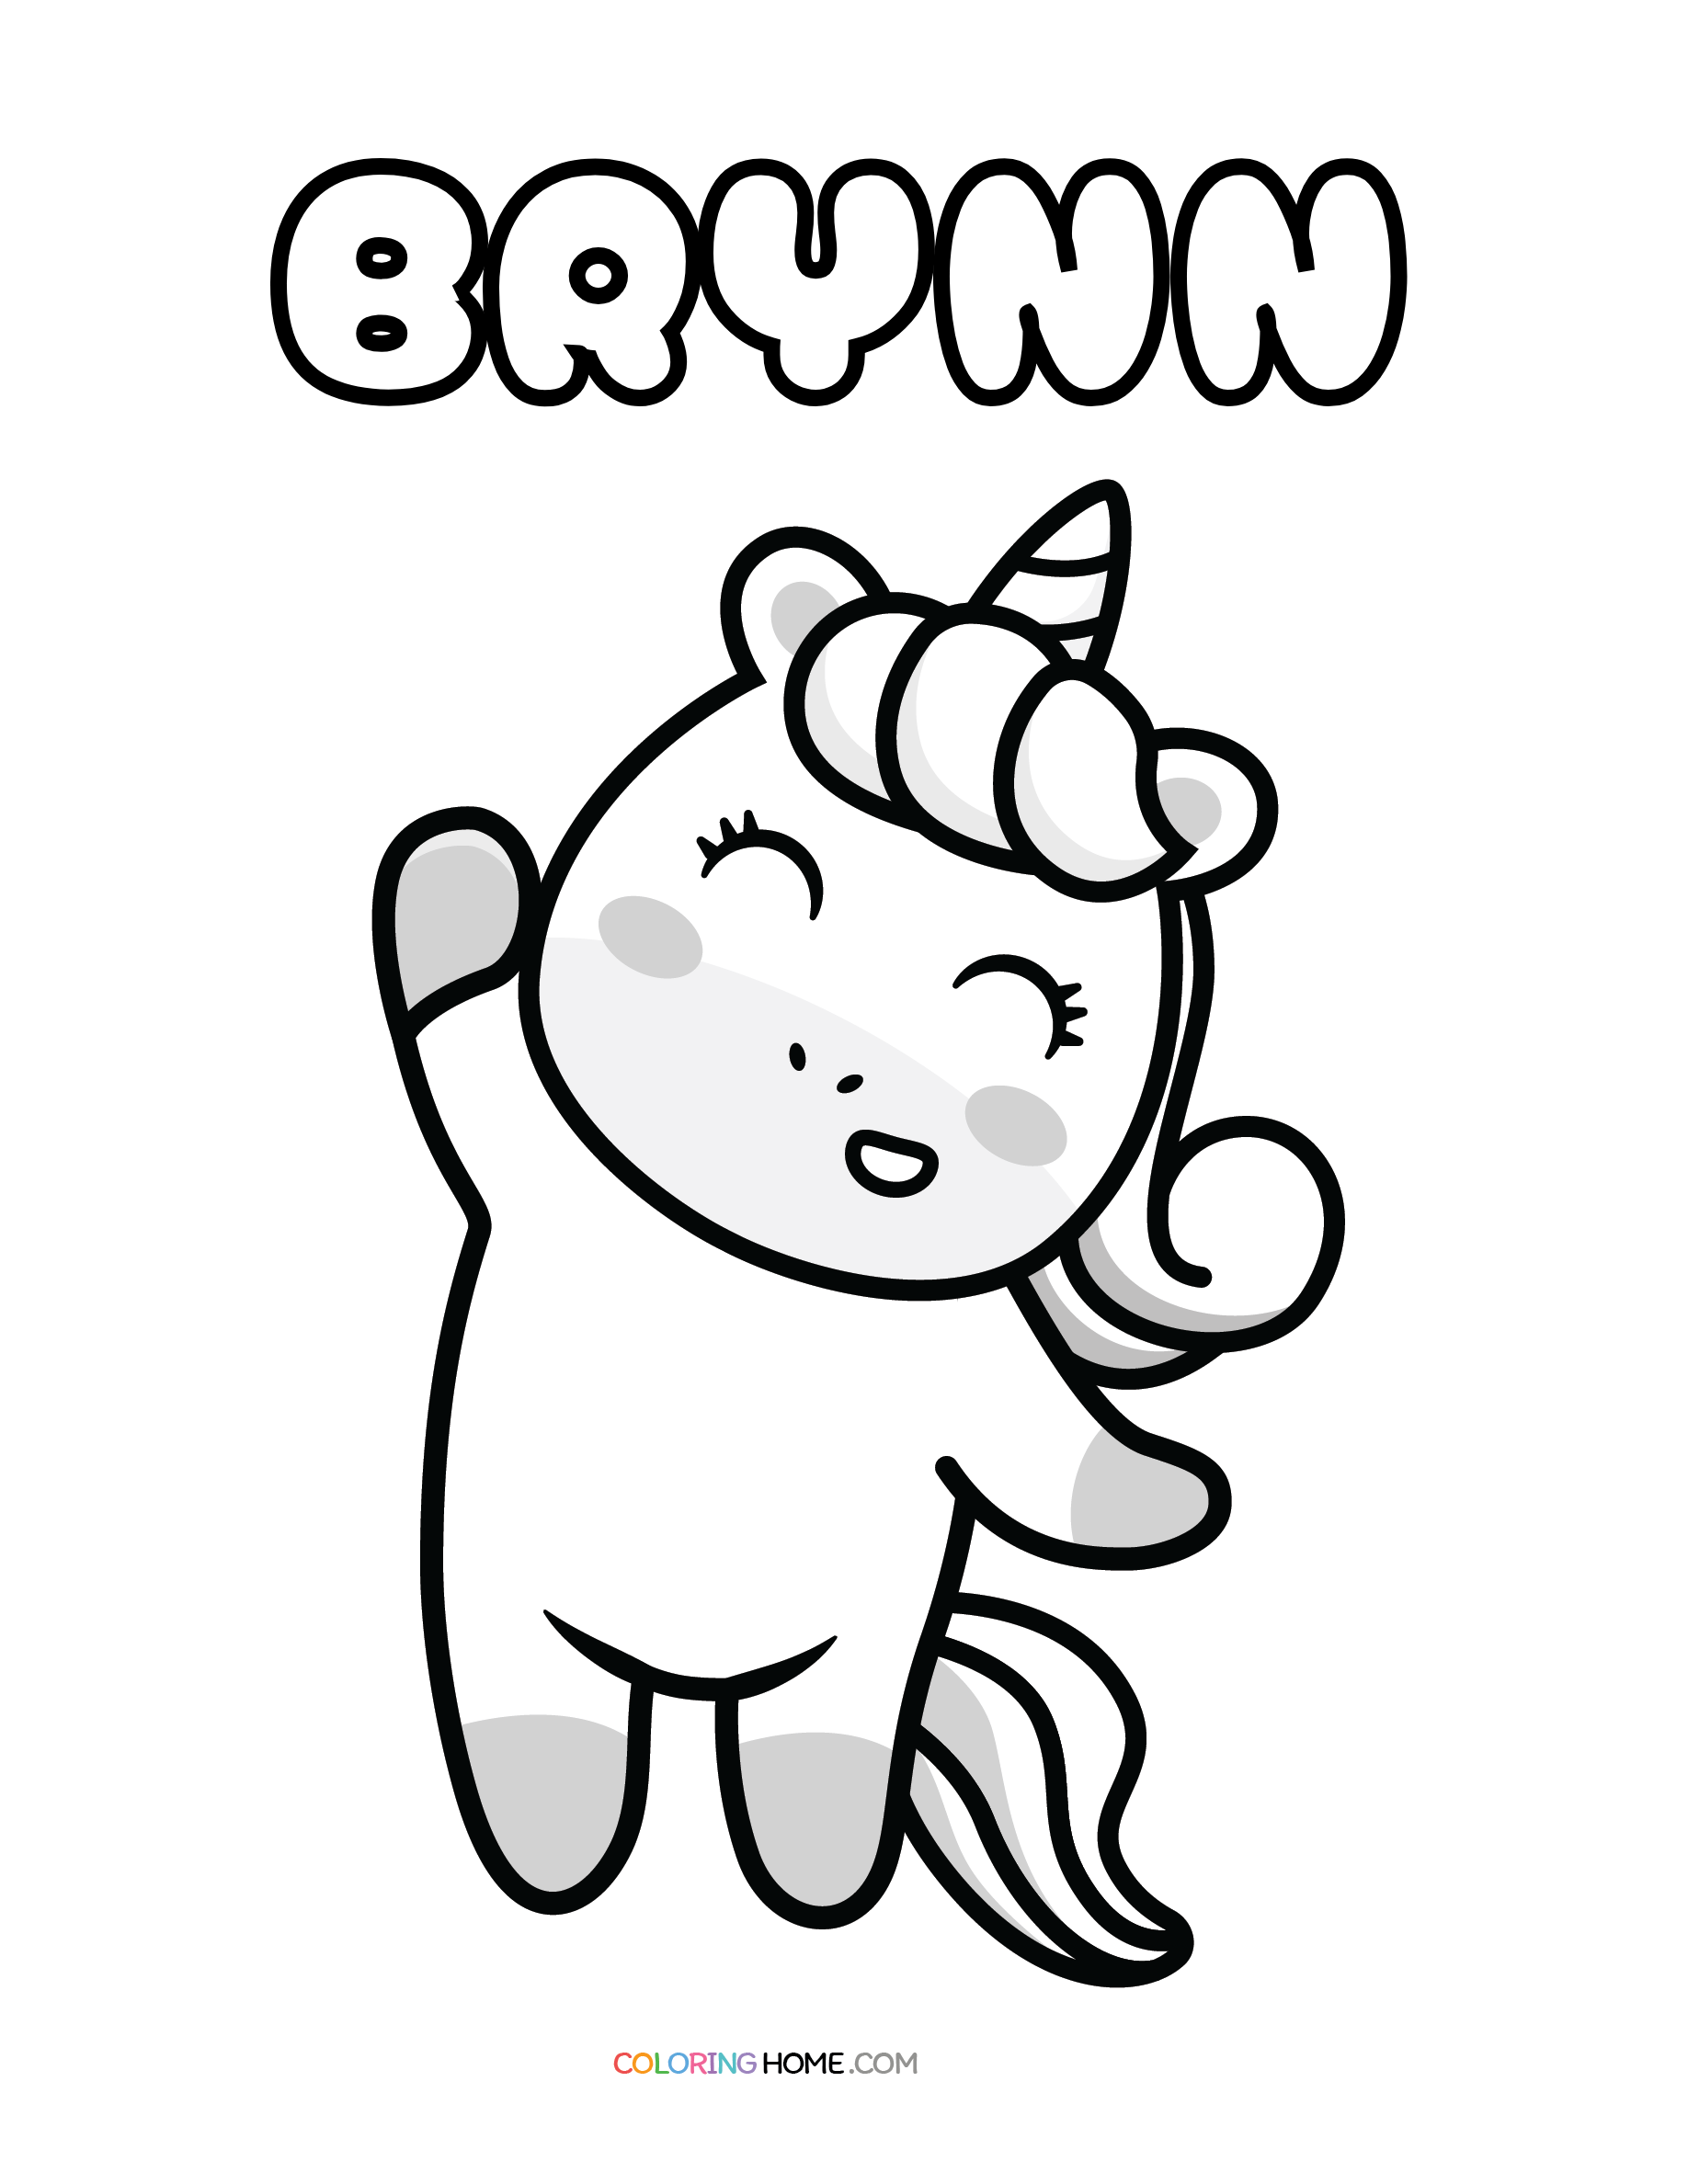 Brynn unicorn coloring page